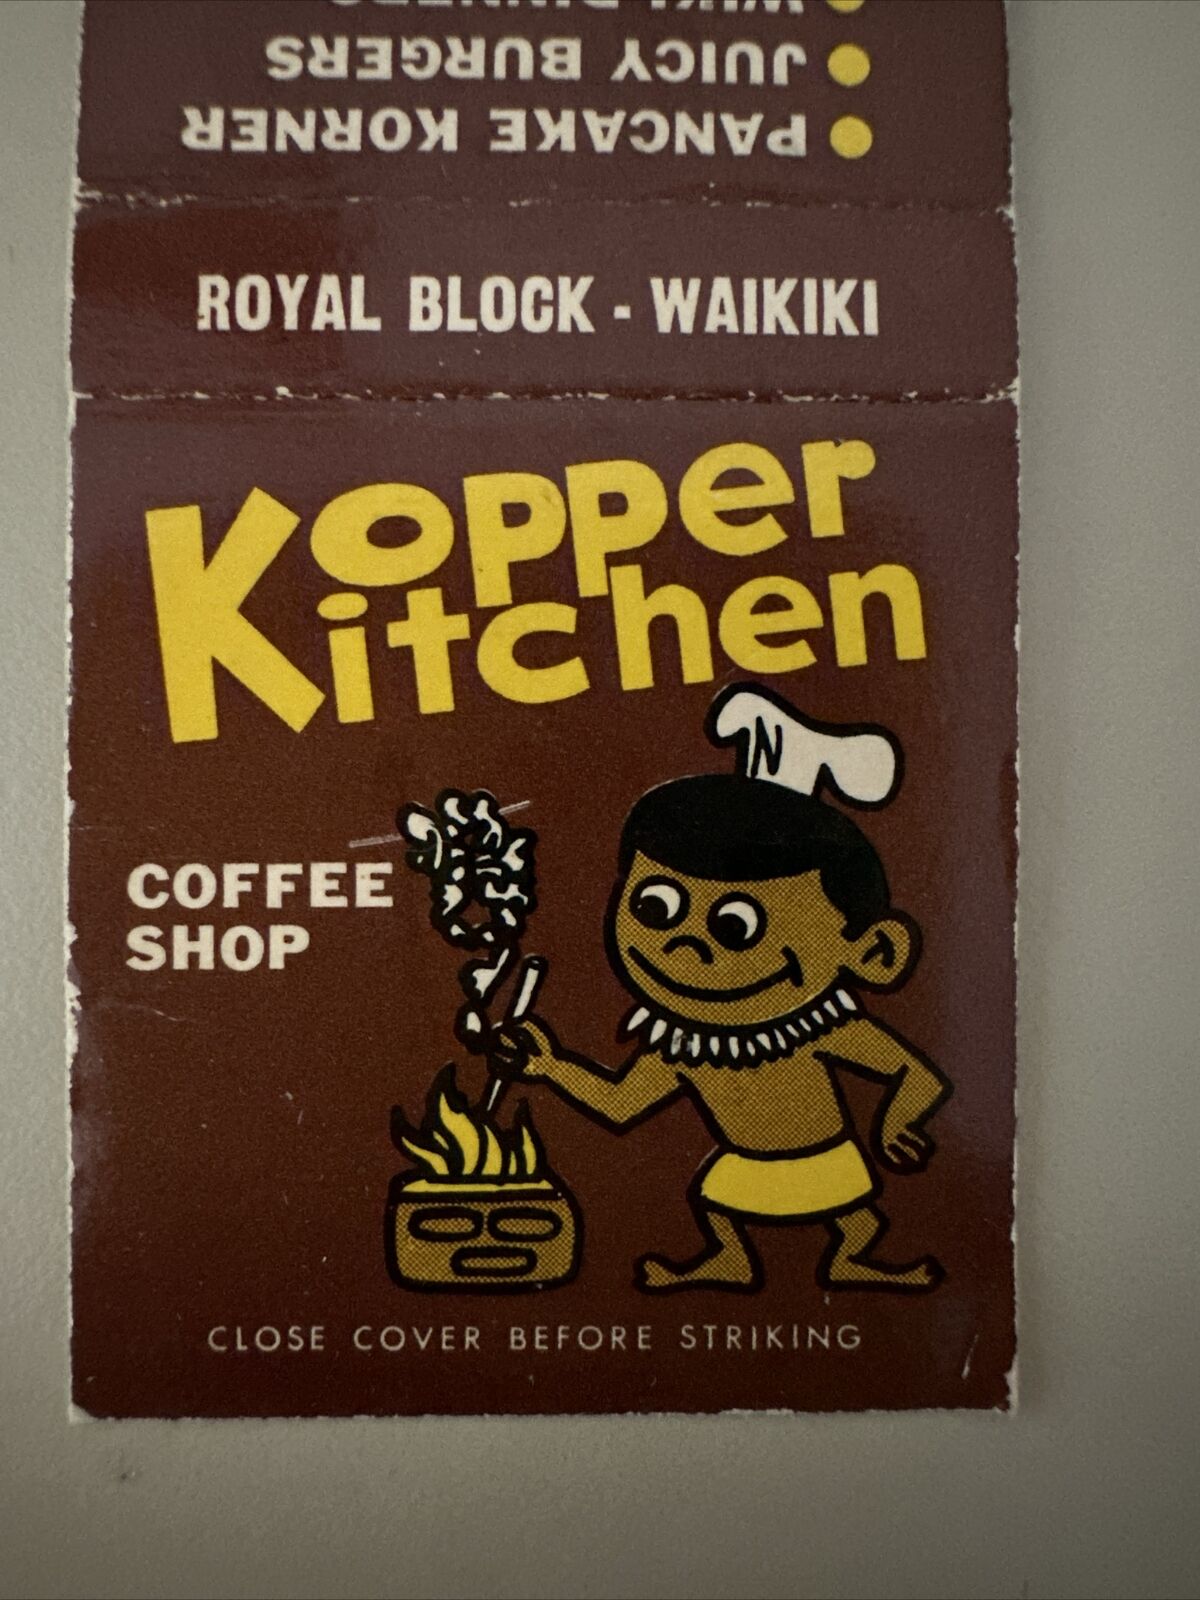 Vintage 1960s Kopper Kitchen Coffee Shop Waikiki Hawaii Matchbook Cover